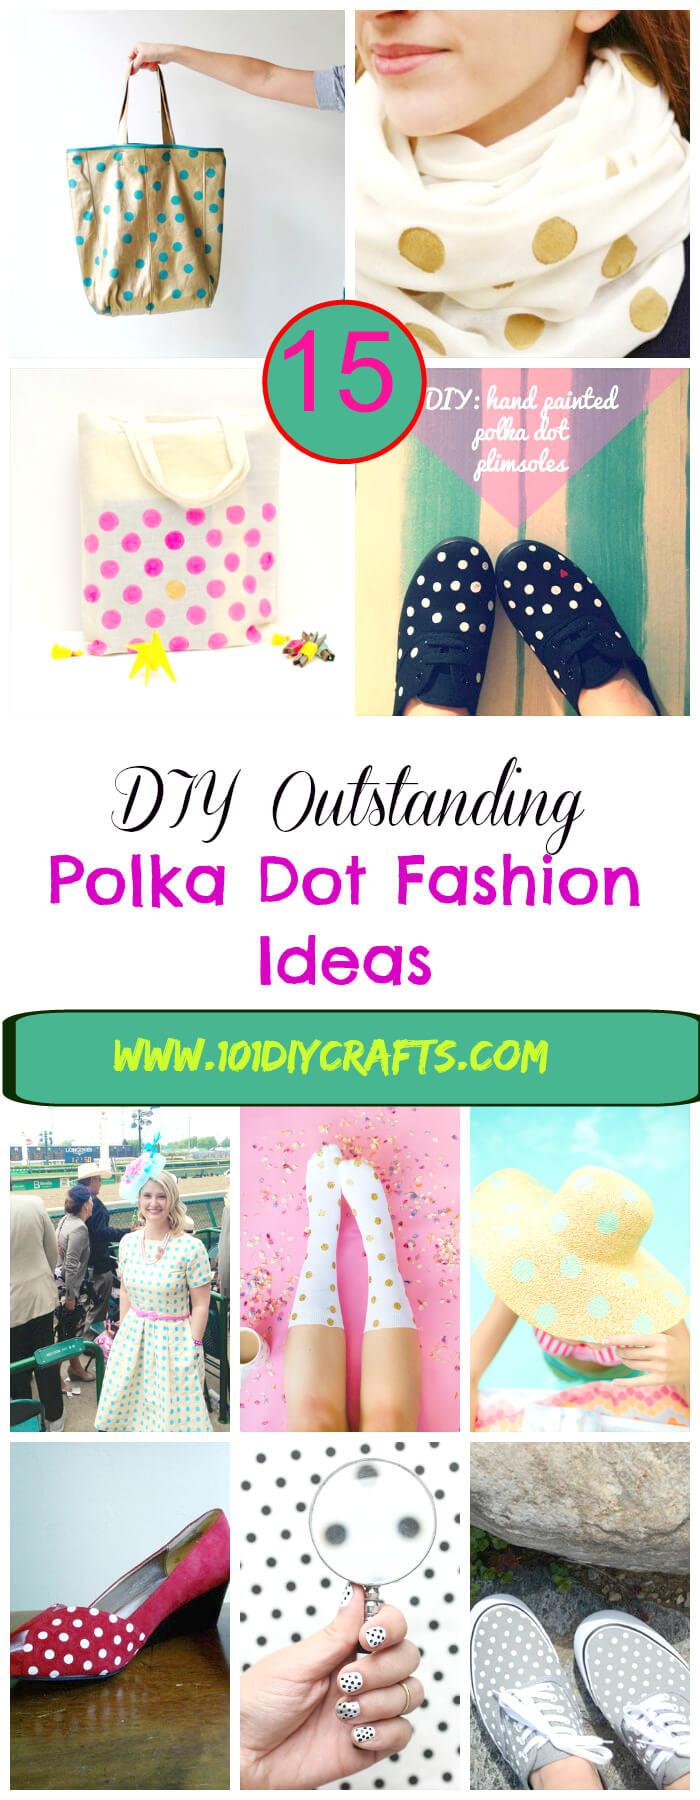 15 DIY Outstanding Polka Dot Fashion Ideas